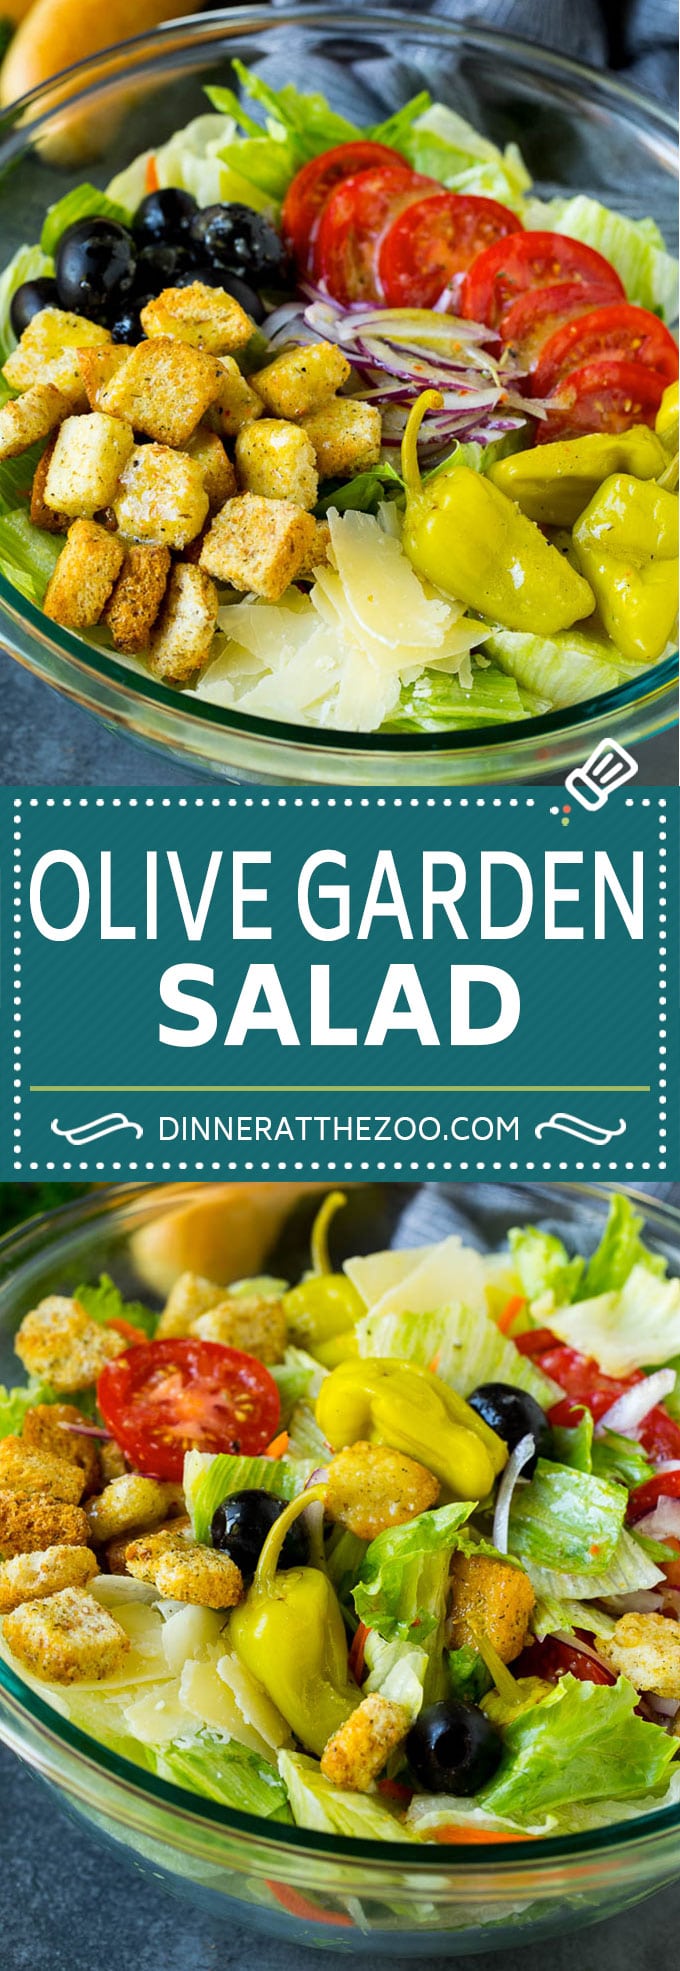 Receta de ensalada de Olive Garden |  Ensalada italiana #insalata #lattuce #oliva # guarnición # cena #dinneratthezoo